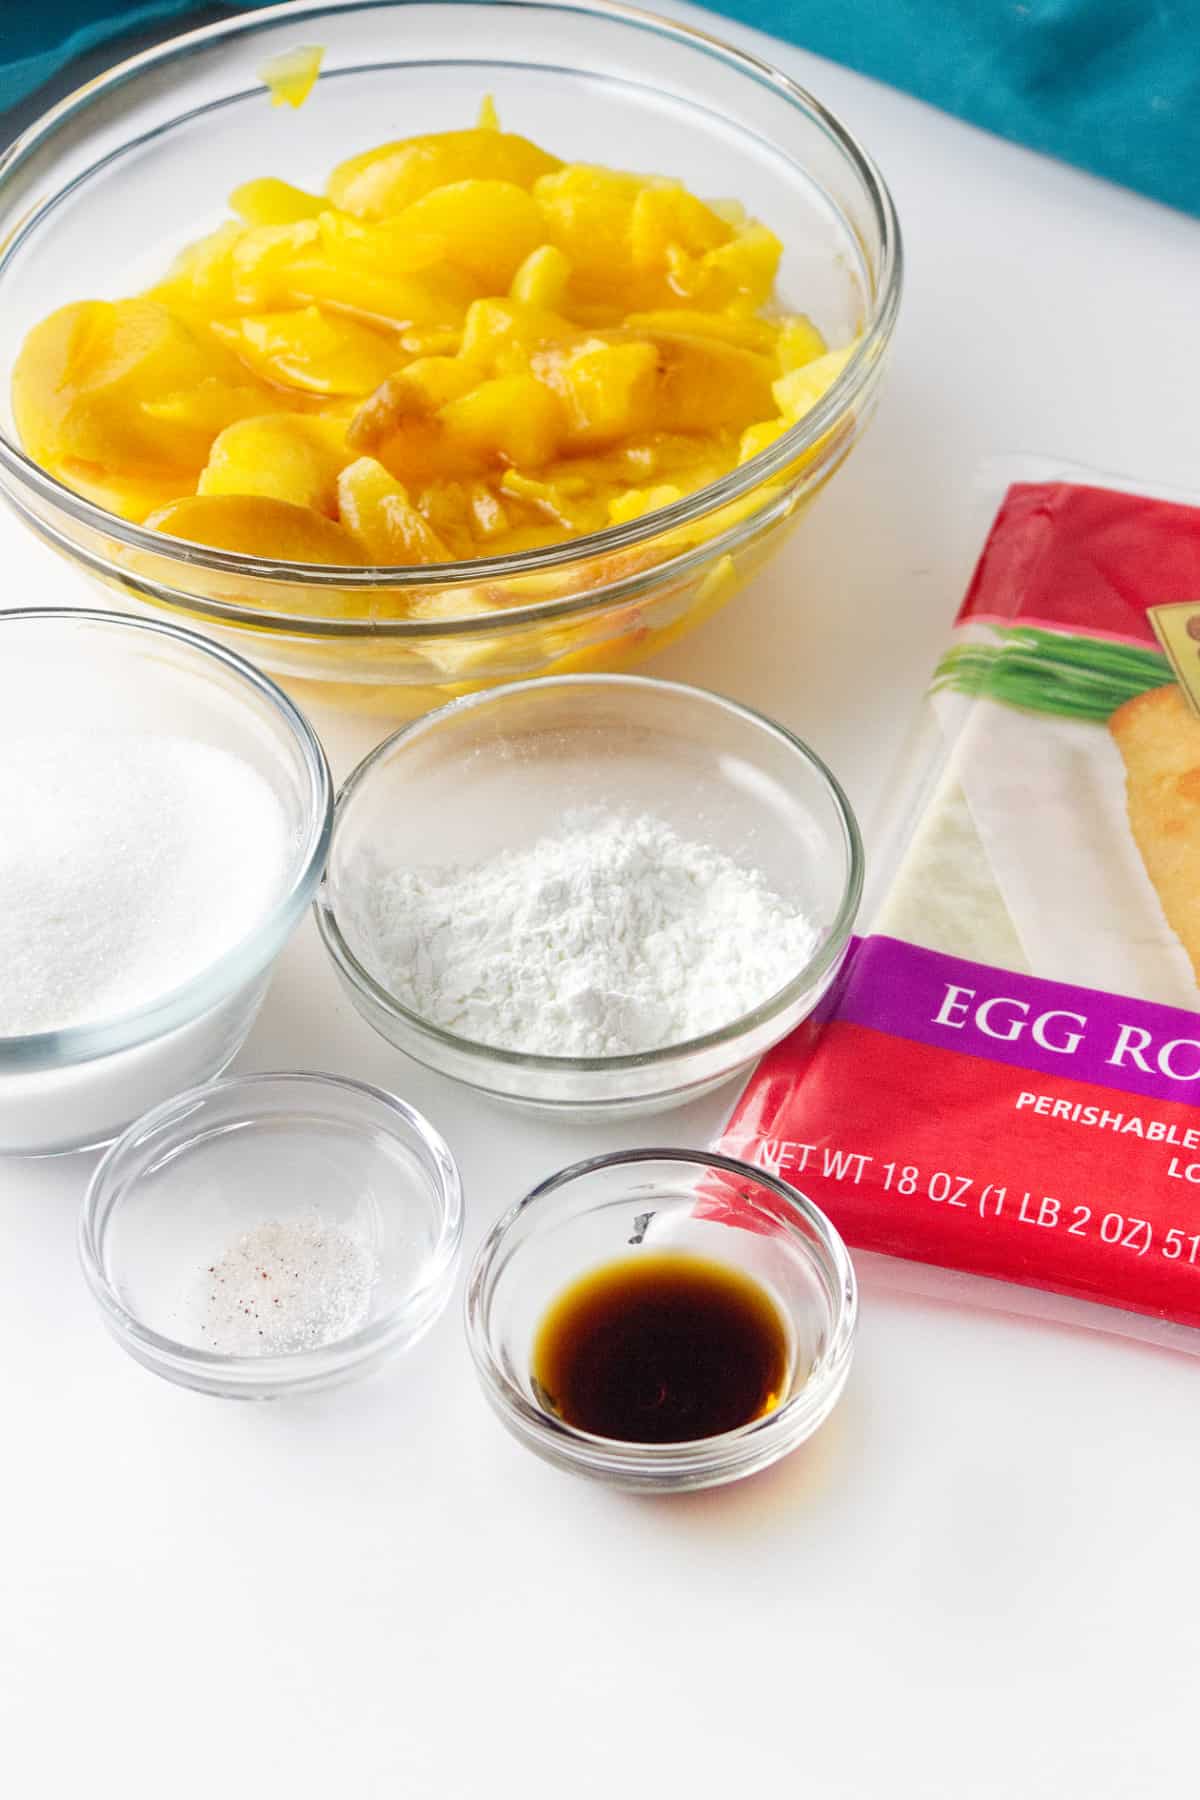 ingredients for making peach cobbler egg rolls.